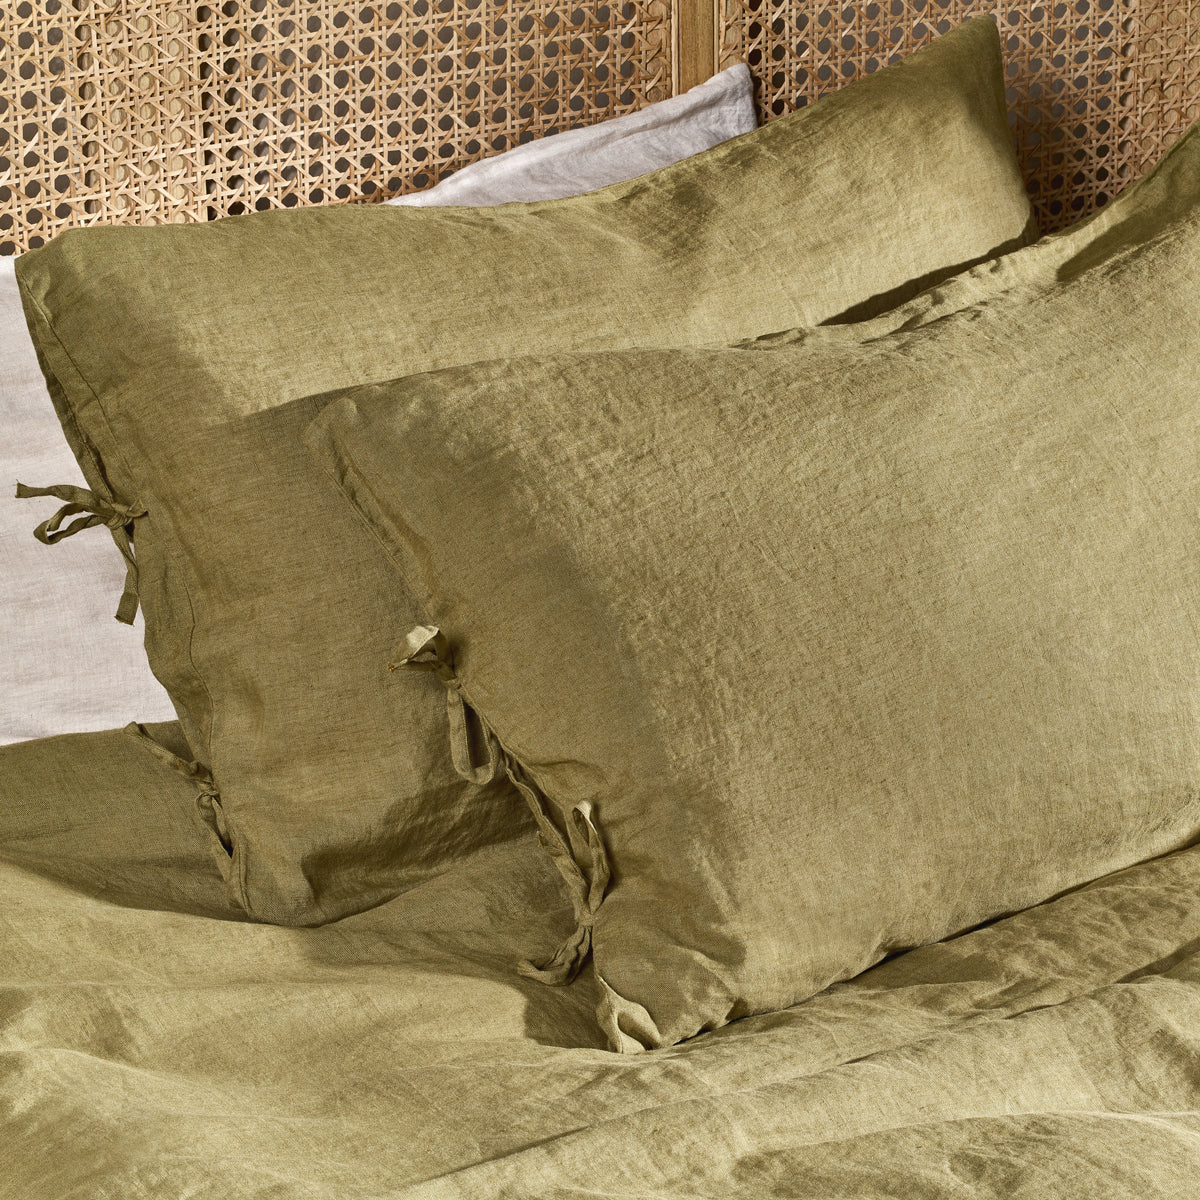 Nkuku Adya Linen Pillowcase - Olive - Standard